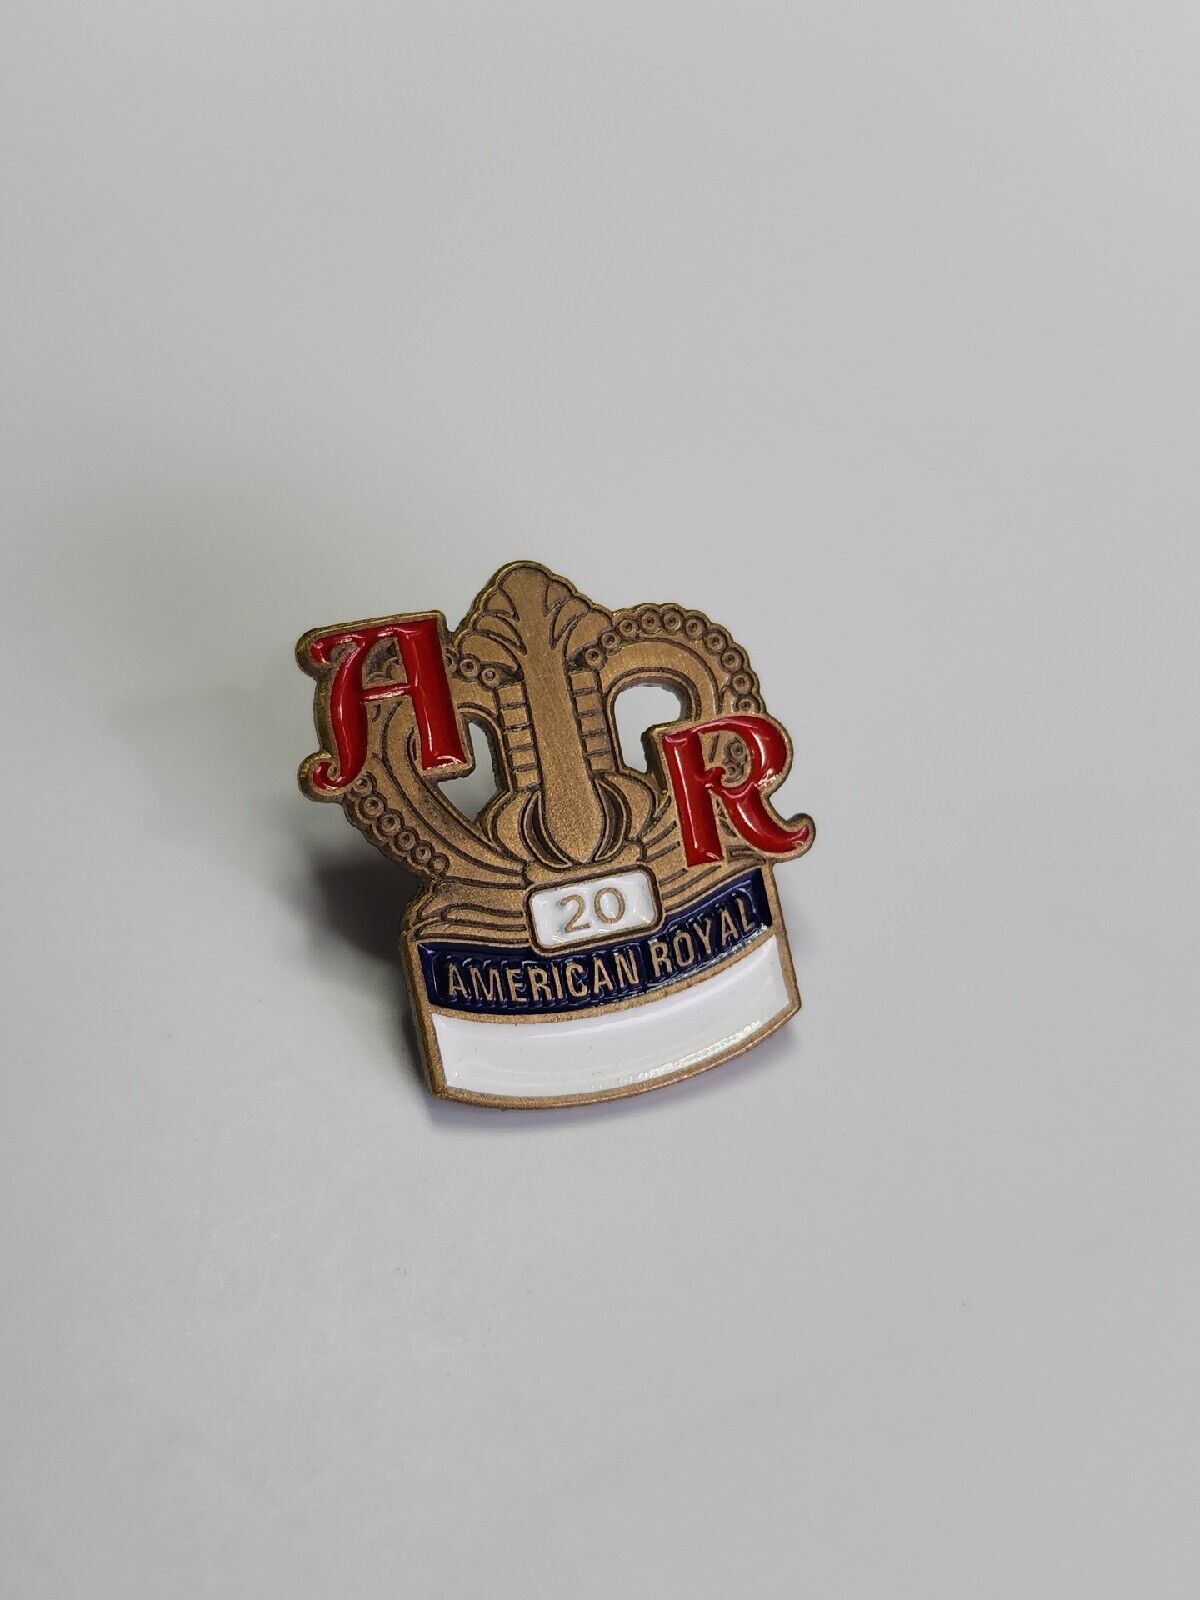 American Royal 20 Educational Award Lapel Pin Kansas City Souvenir  *